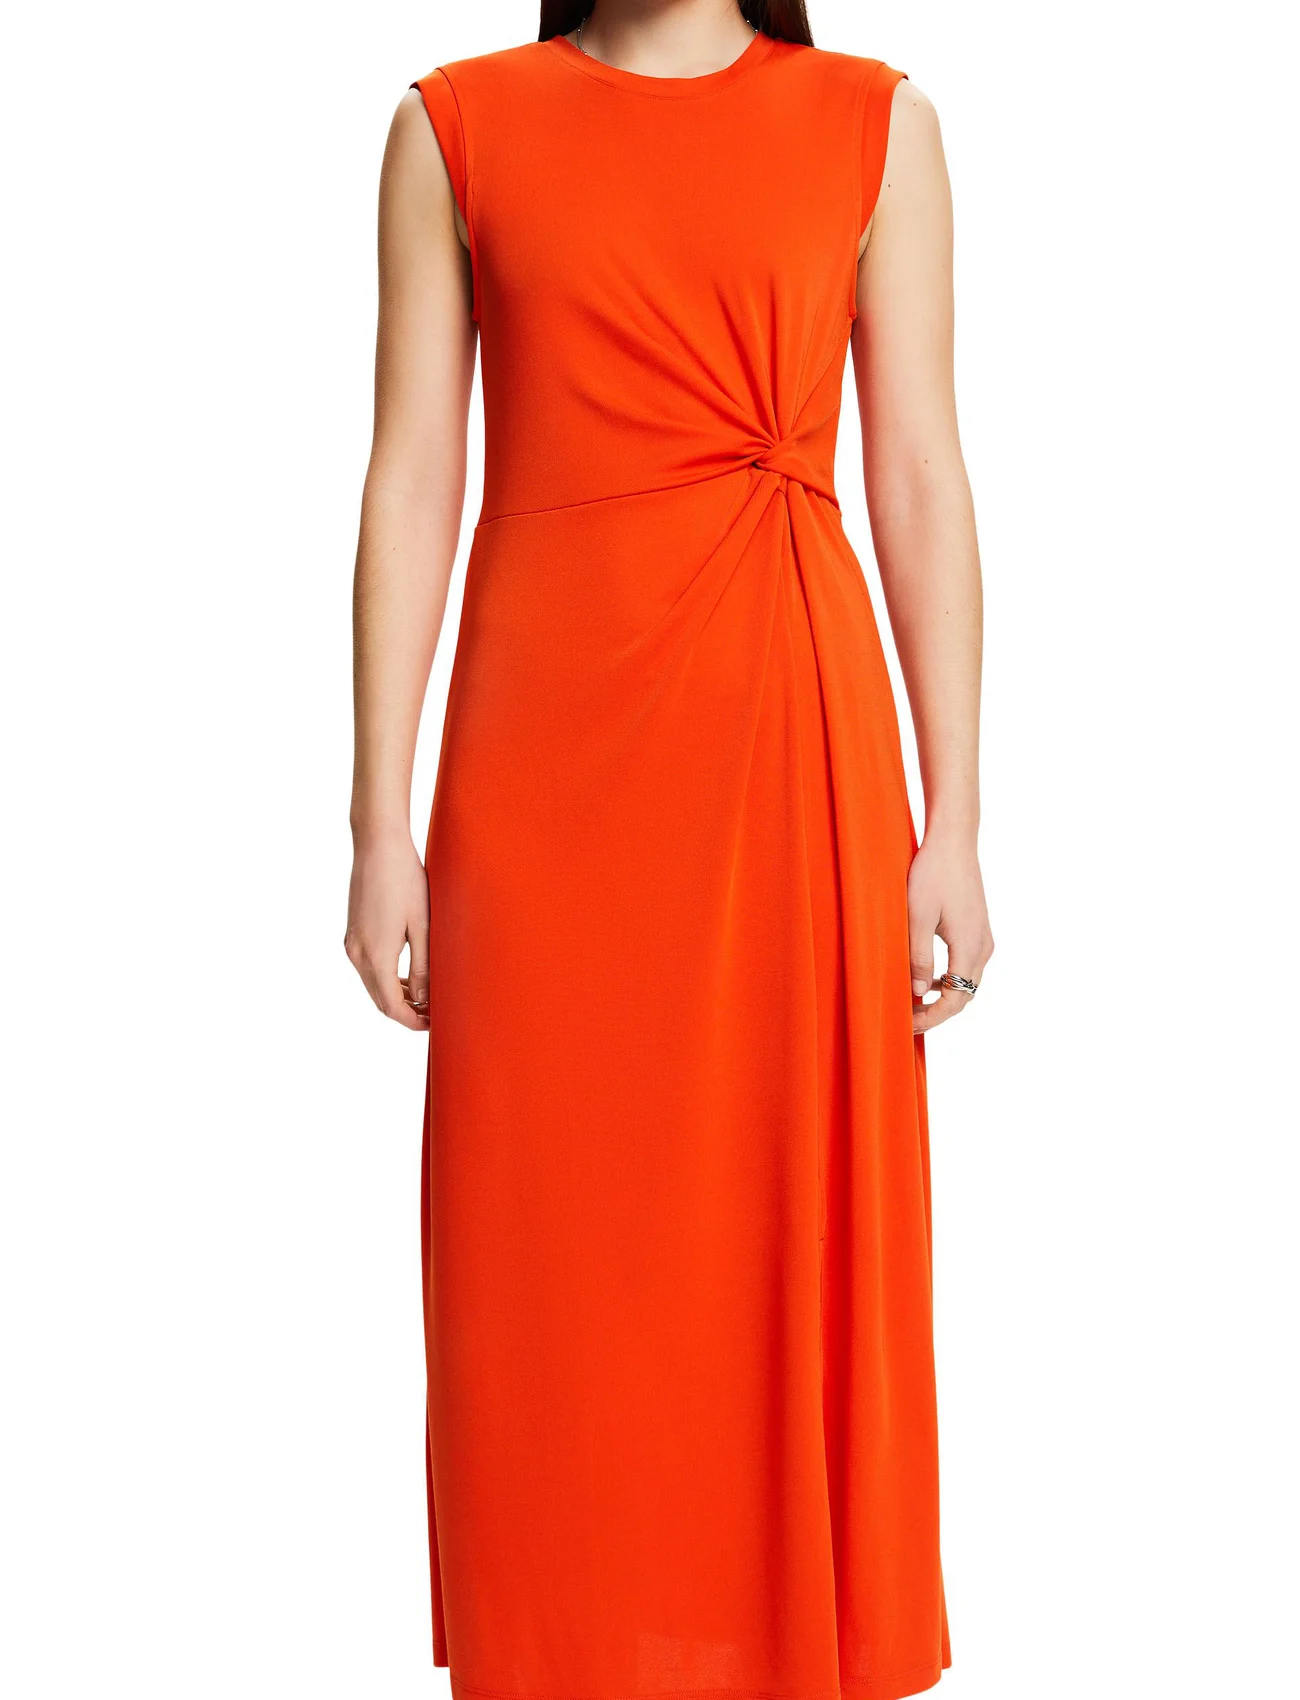 Esprit Casual - Dresses knitted - midimekot - bright orange - 1